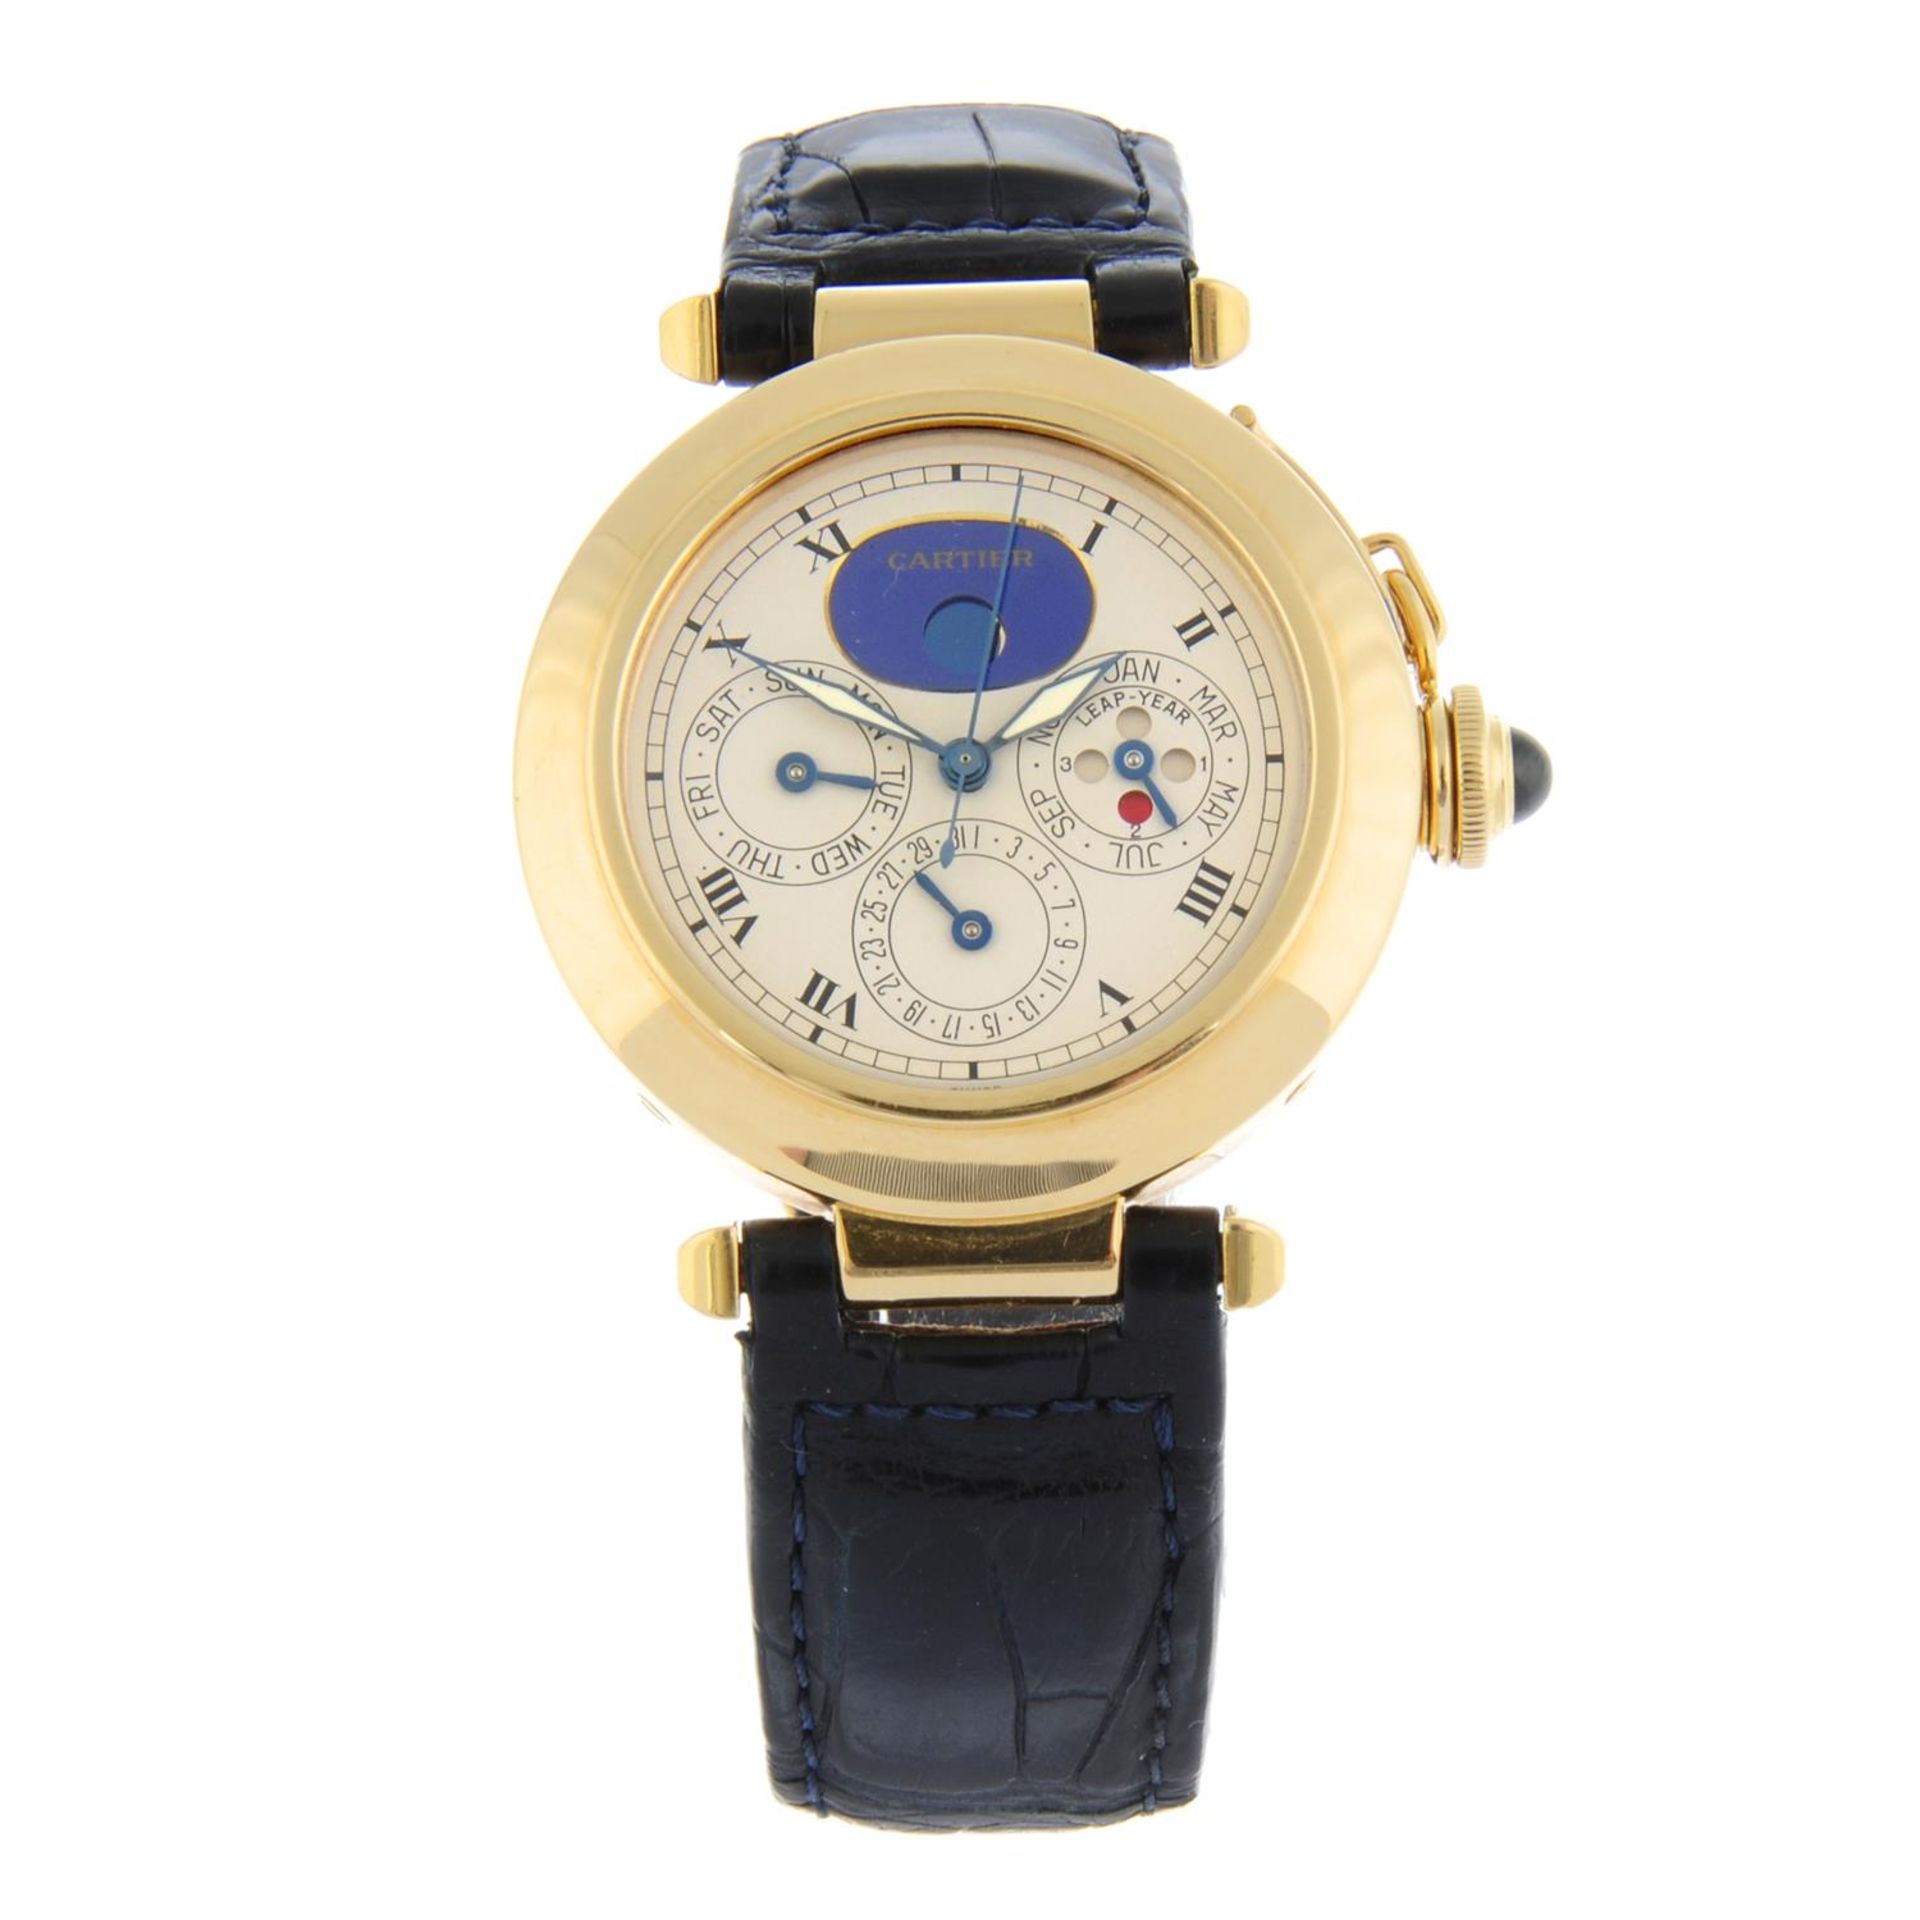 CARTIER - an 18ct yellow gold Pasha perpetual calendar wrist watch, 38mm.